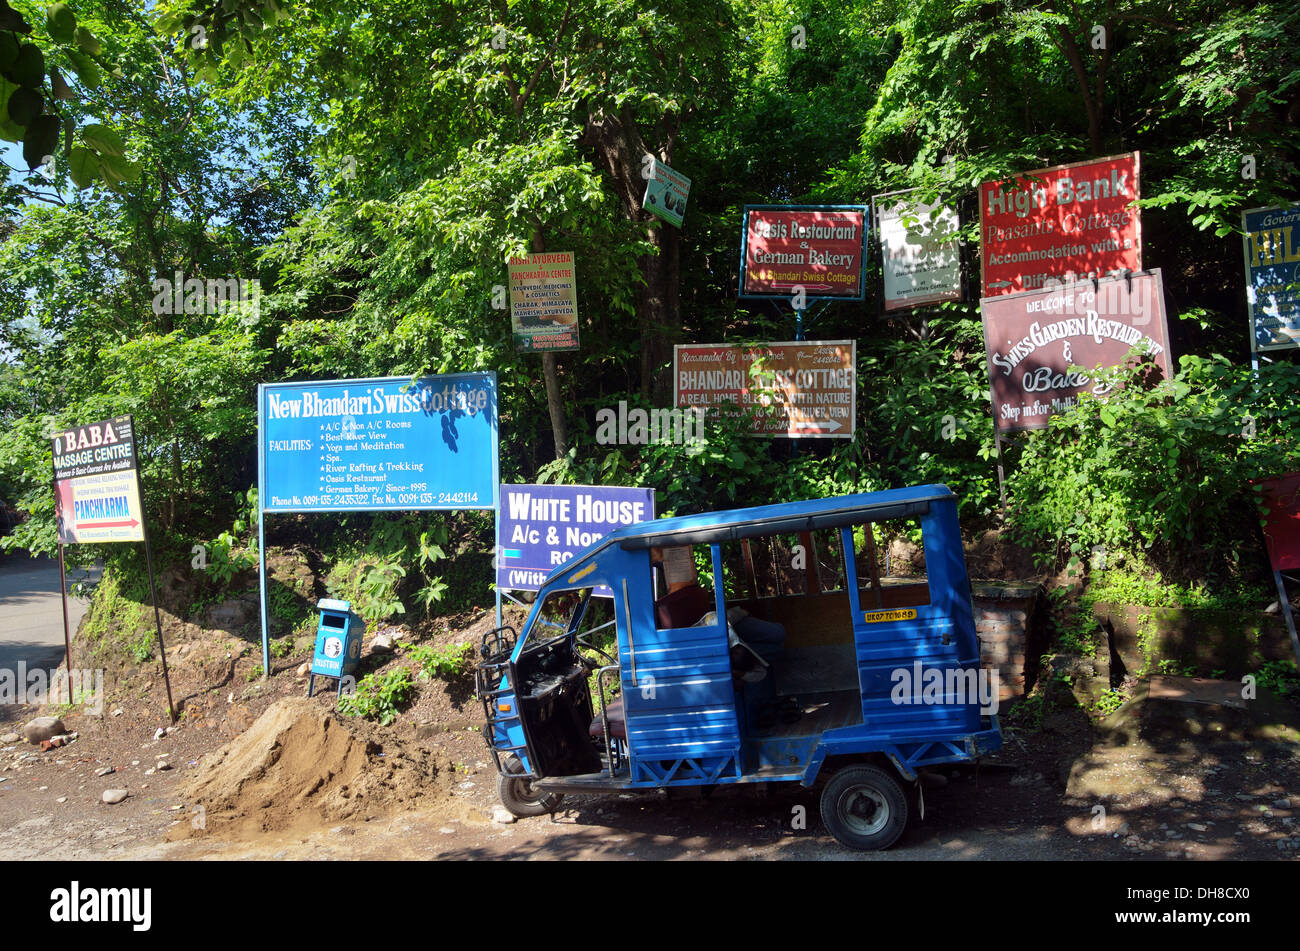 Auto rickshaw parked against advertising boards, High Bank area, Rishikesh, India Stock Photo